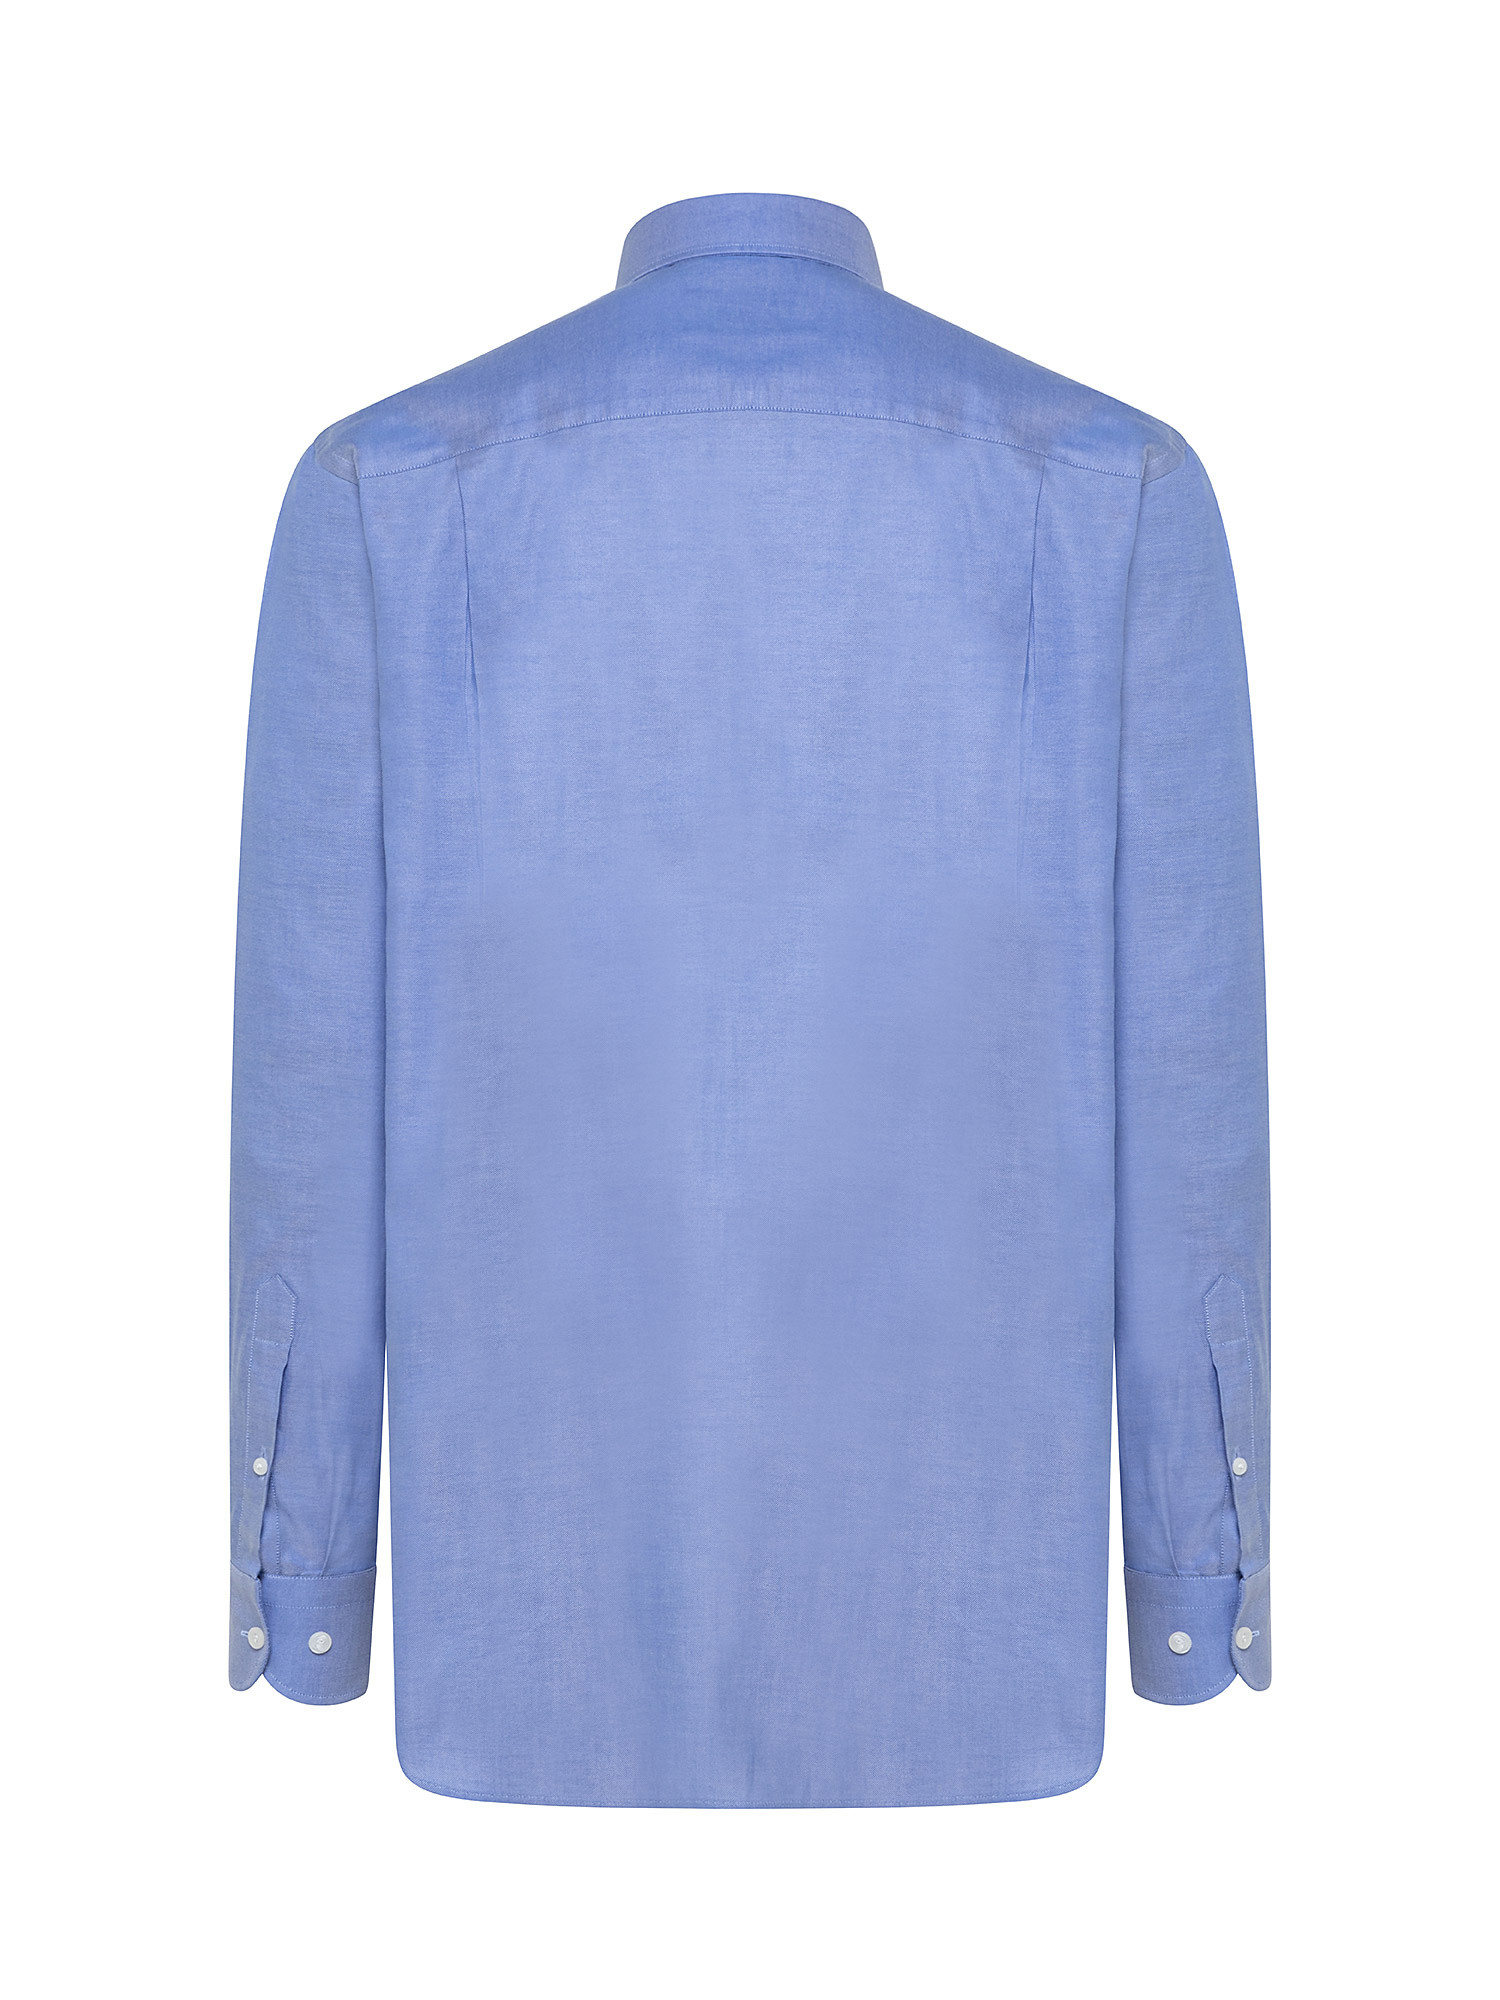 Camicia regular fit in cotone pinpoint doppio ritorto, Azzurro, large image number 1